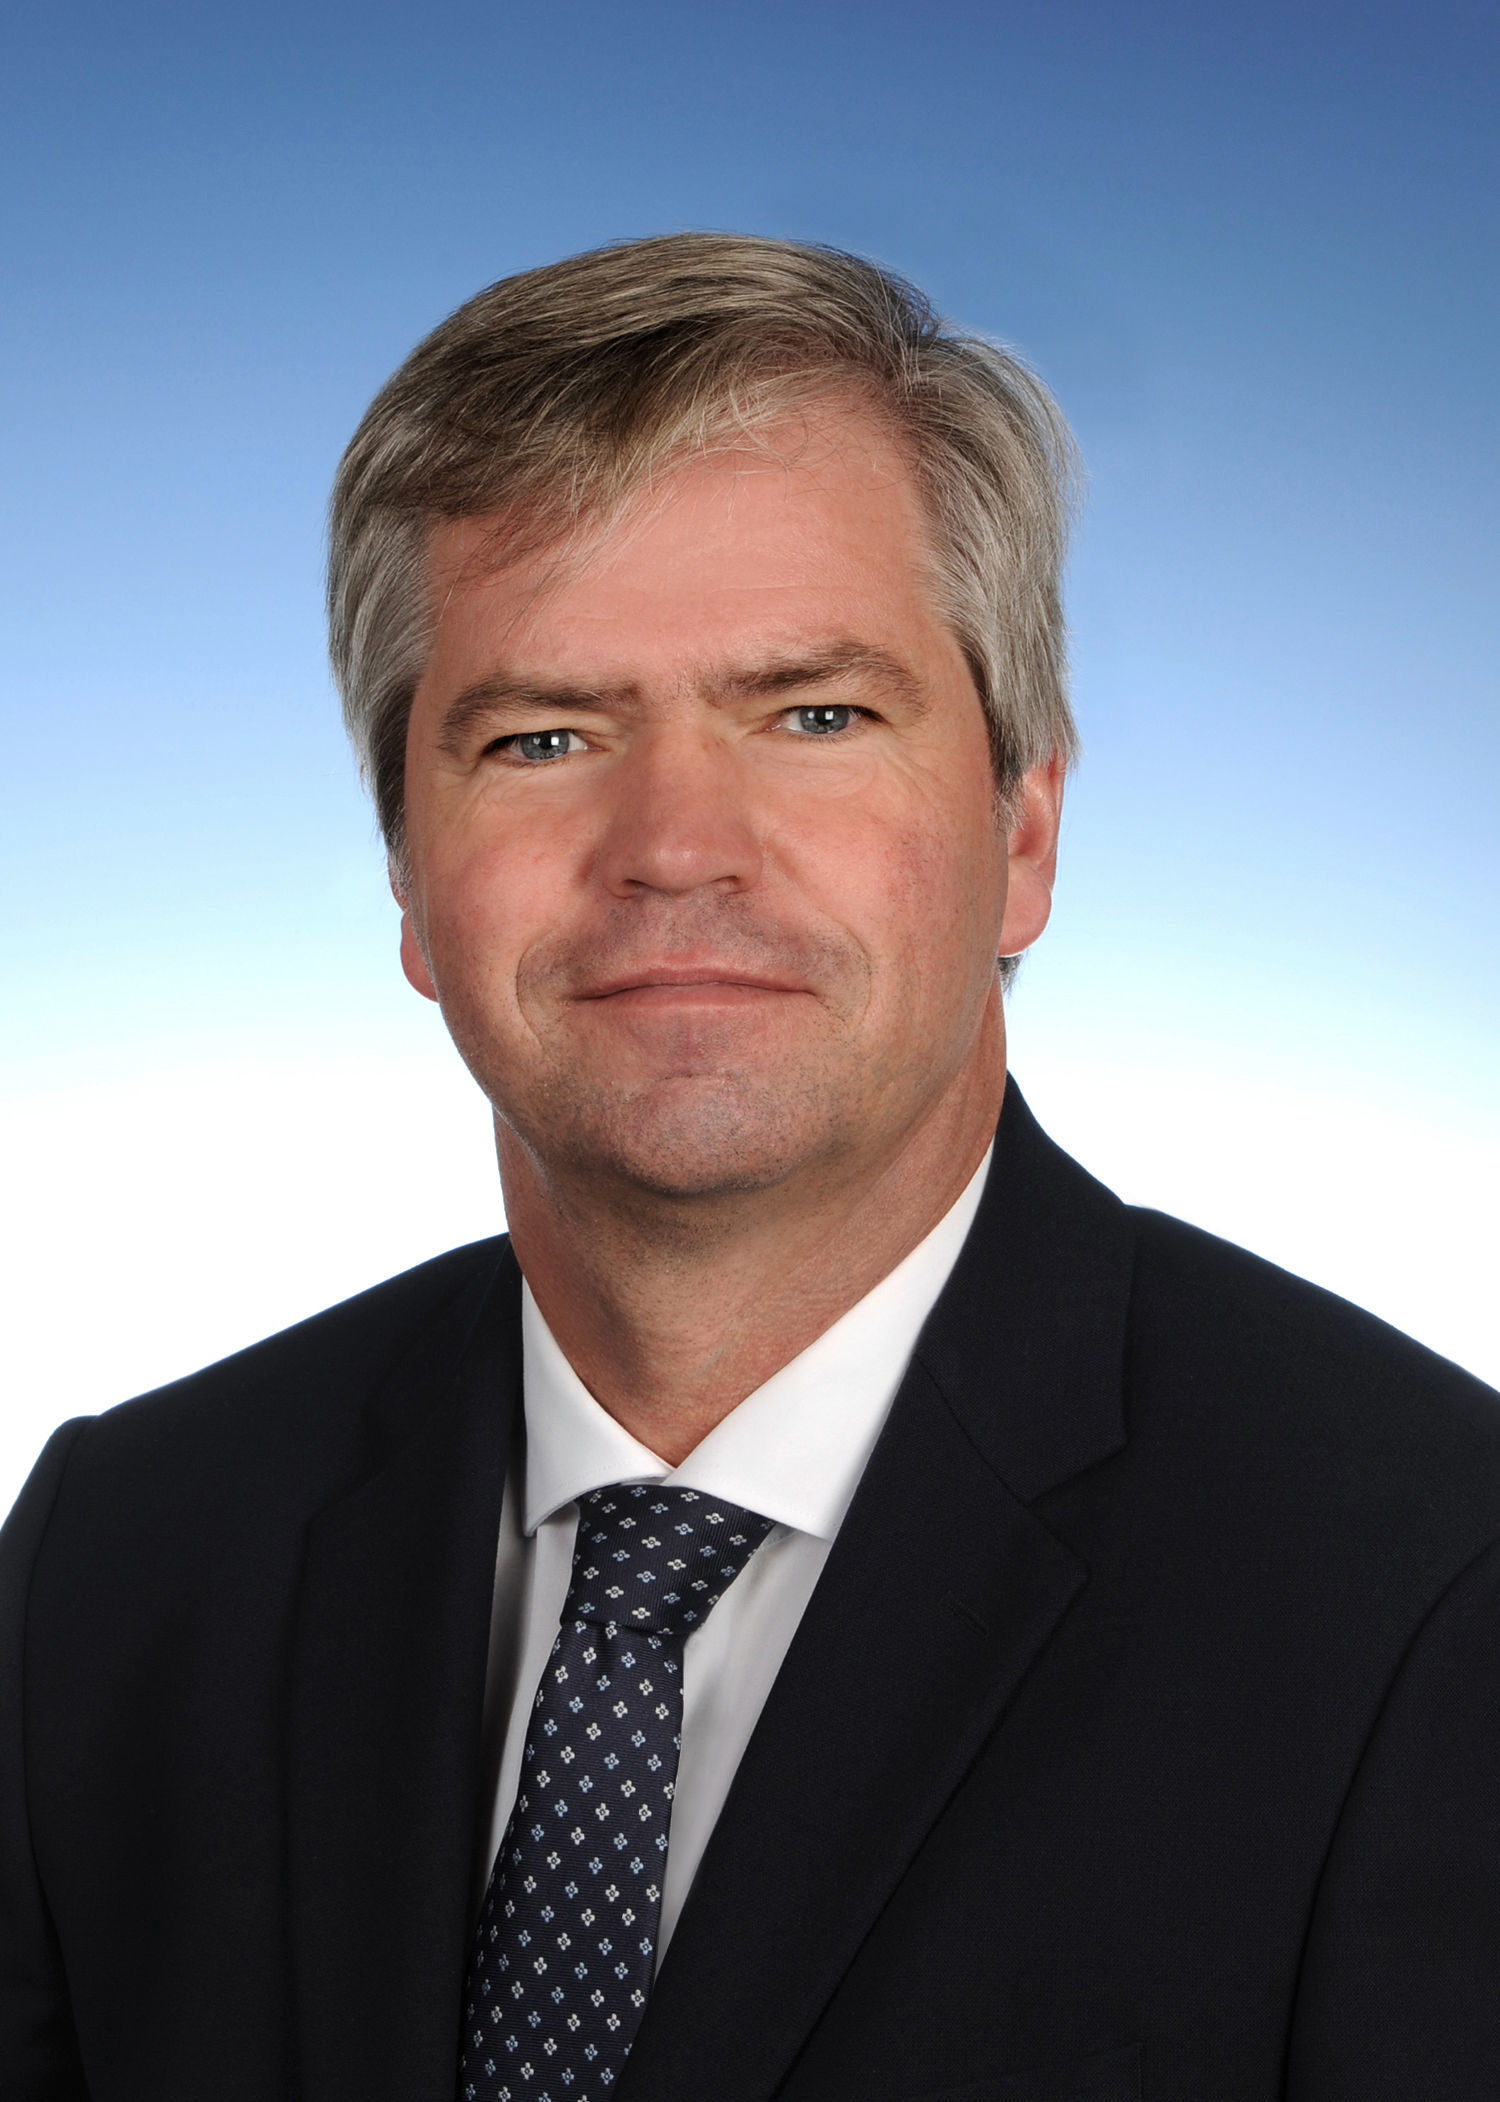 Dirk Große-Loheide appointed new Board member for Procurement at Volkswagen Passenger Cars brand